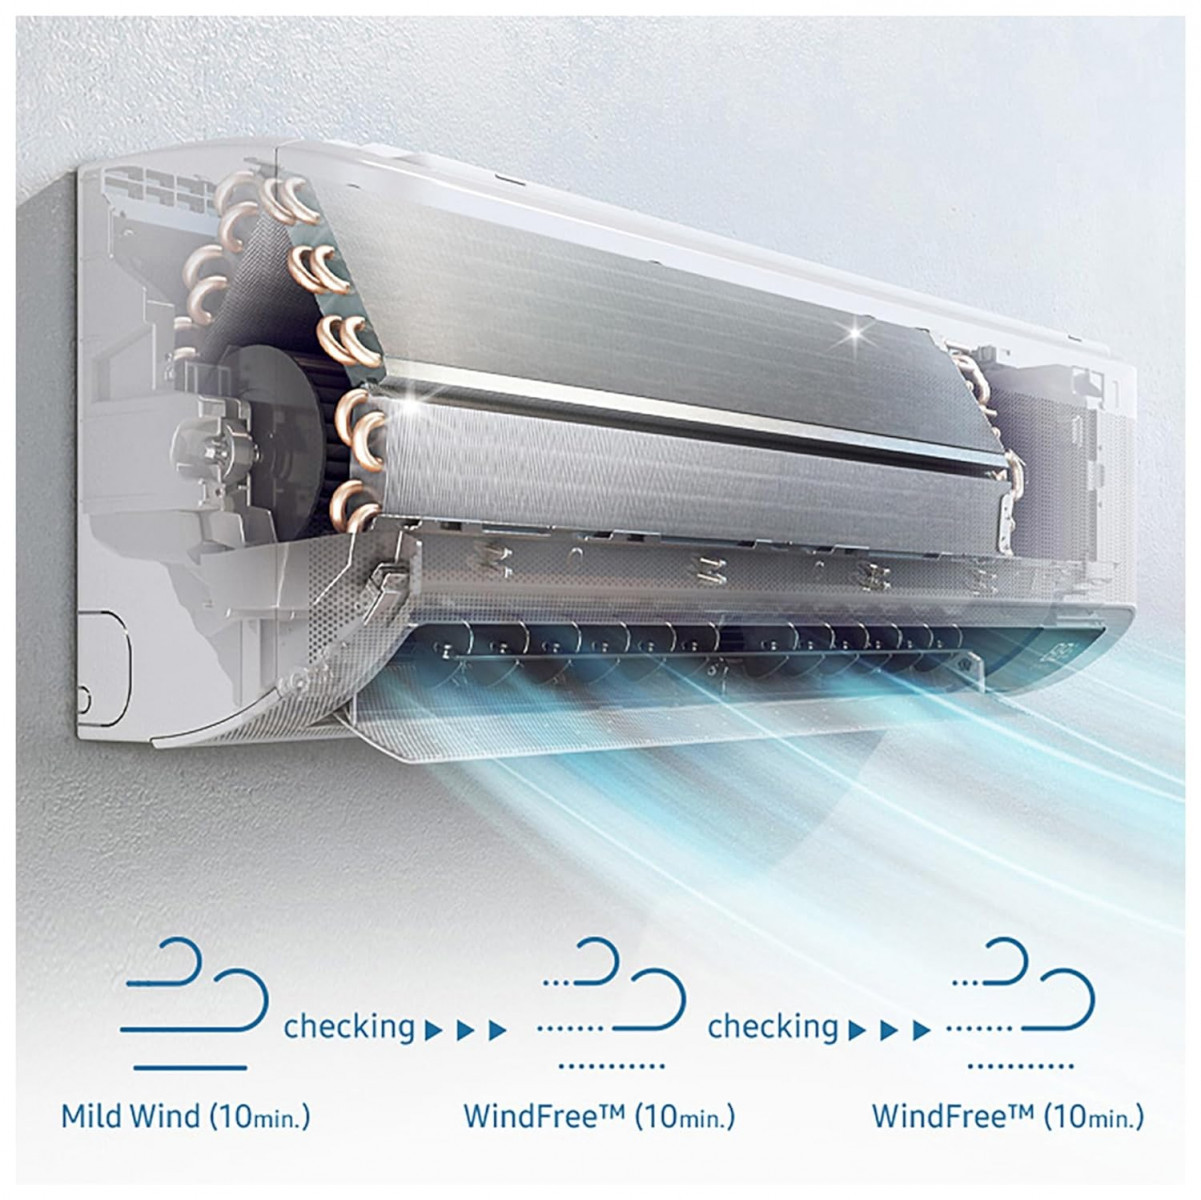 Samsung 1 Ton 3 Star Inverter Split AC Copper Convertible 5-in-1 Cooling Mode